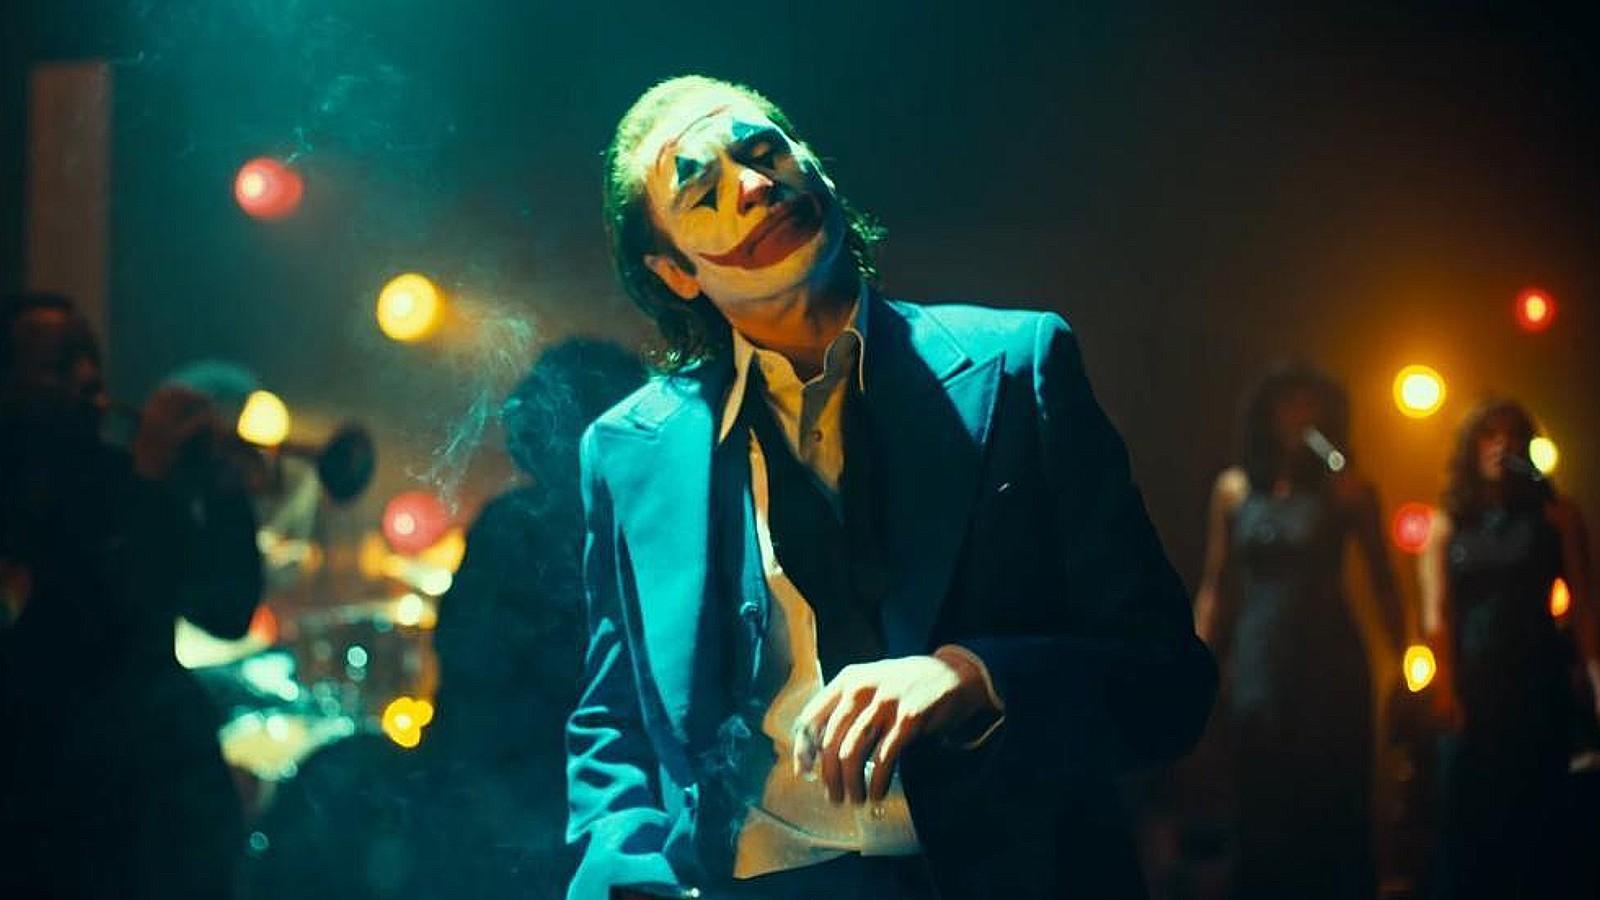 Arthur Fleck in Joker 2